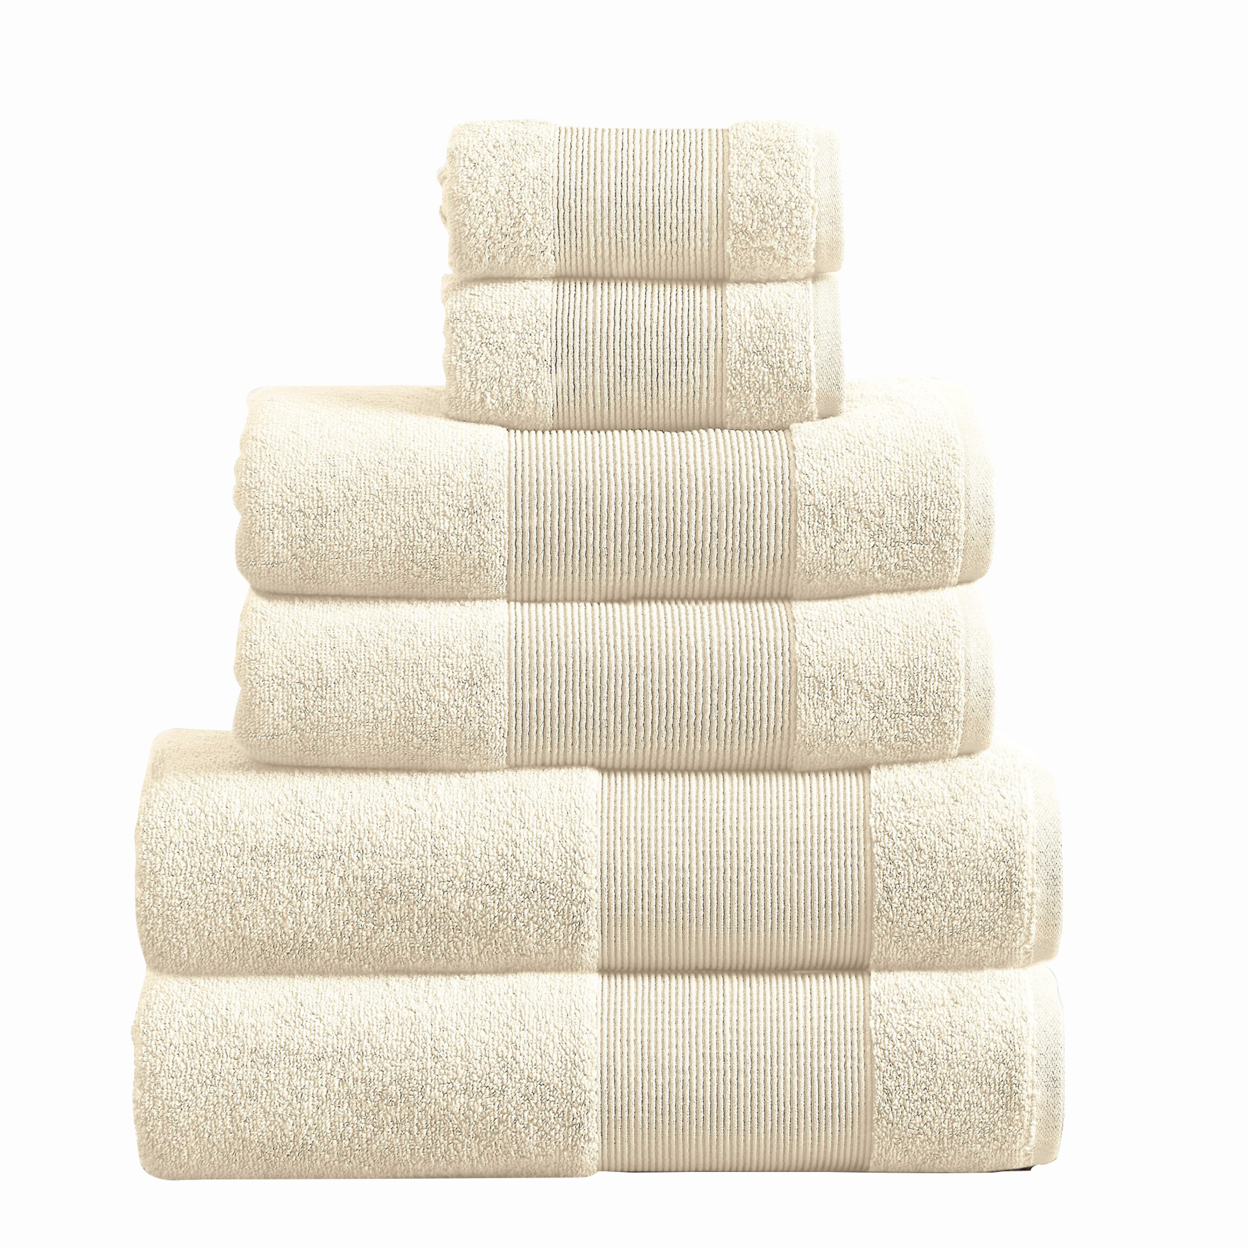 Indy Modern 6 Piece Cotton Towel Set, Softly Textured Design, Creamy White- Saltoro Sherpi